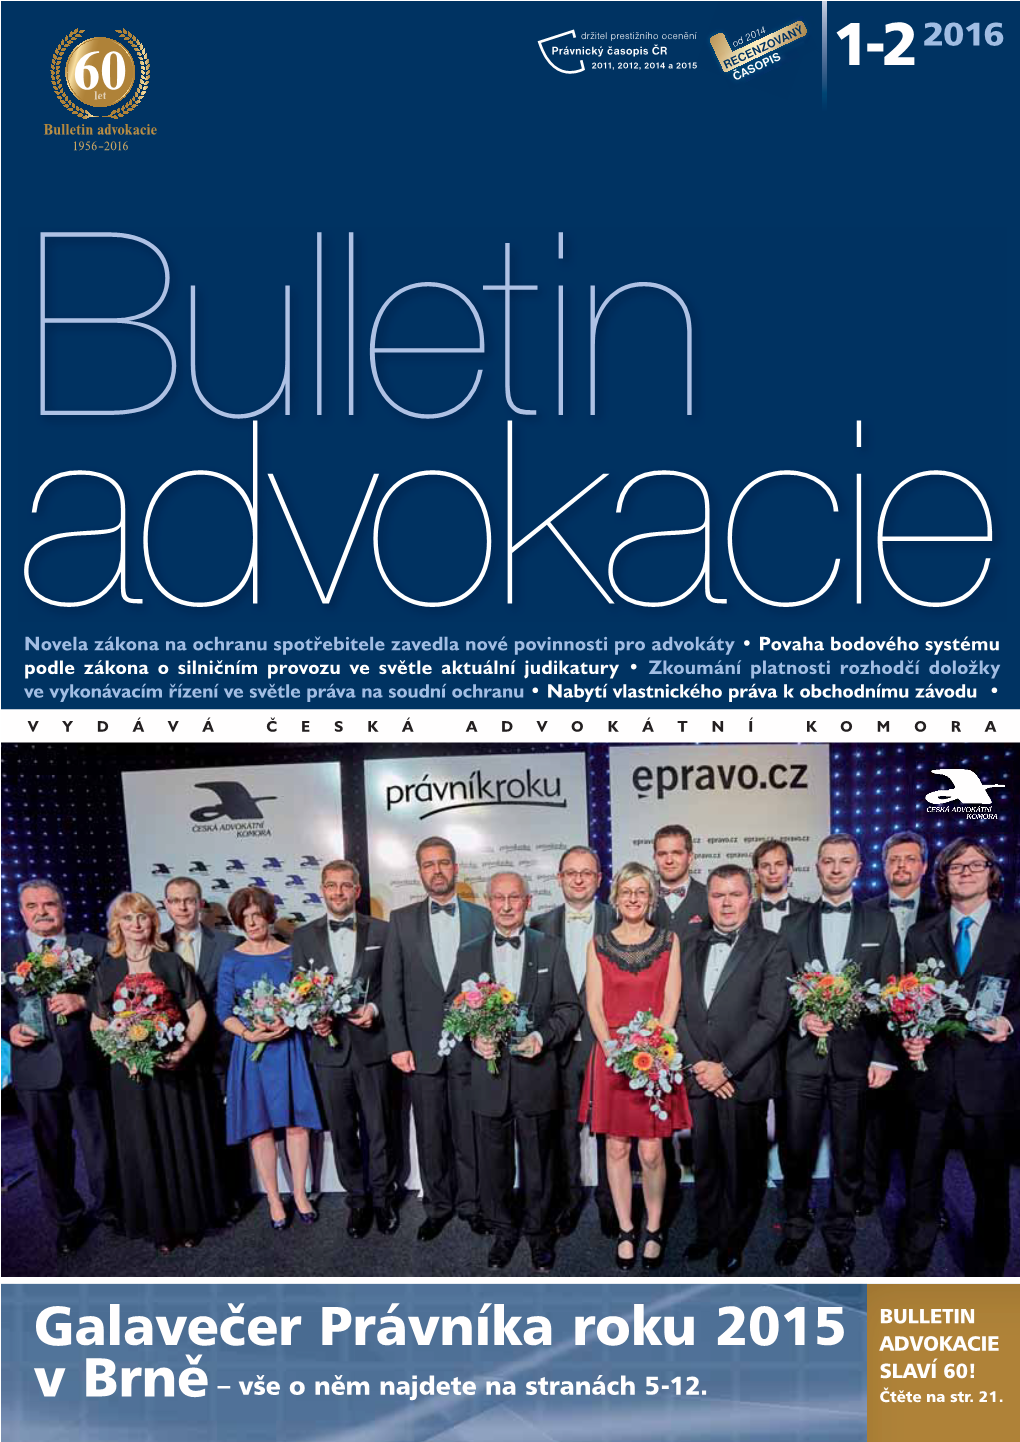 Bulletin Advokacie Bulletin195626–2016 Advokacie